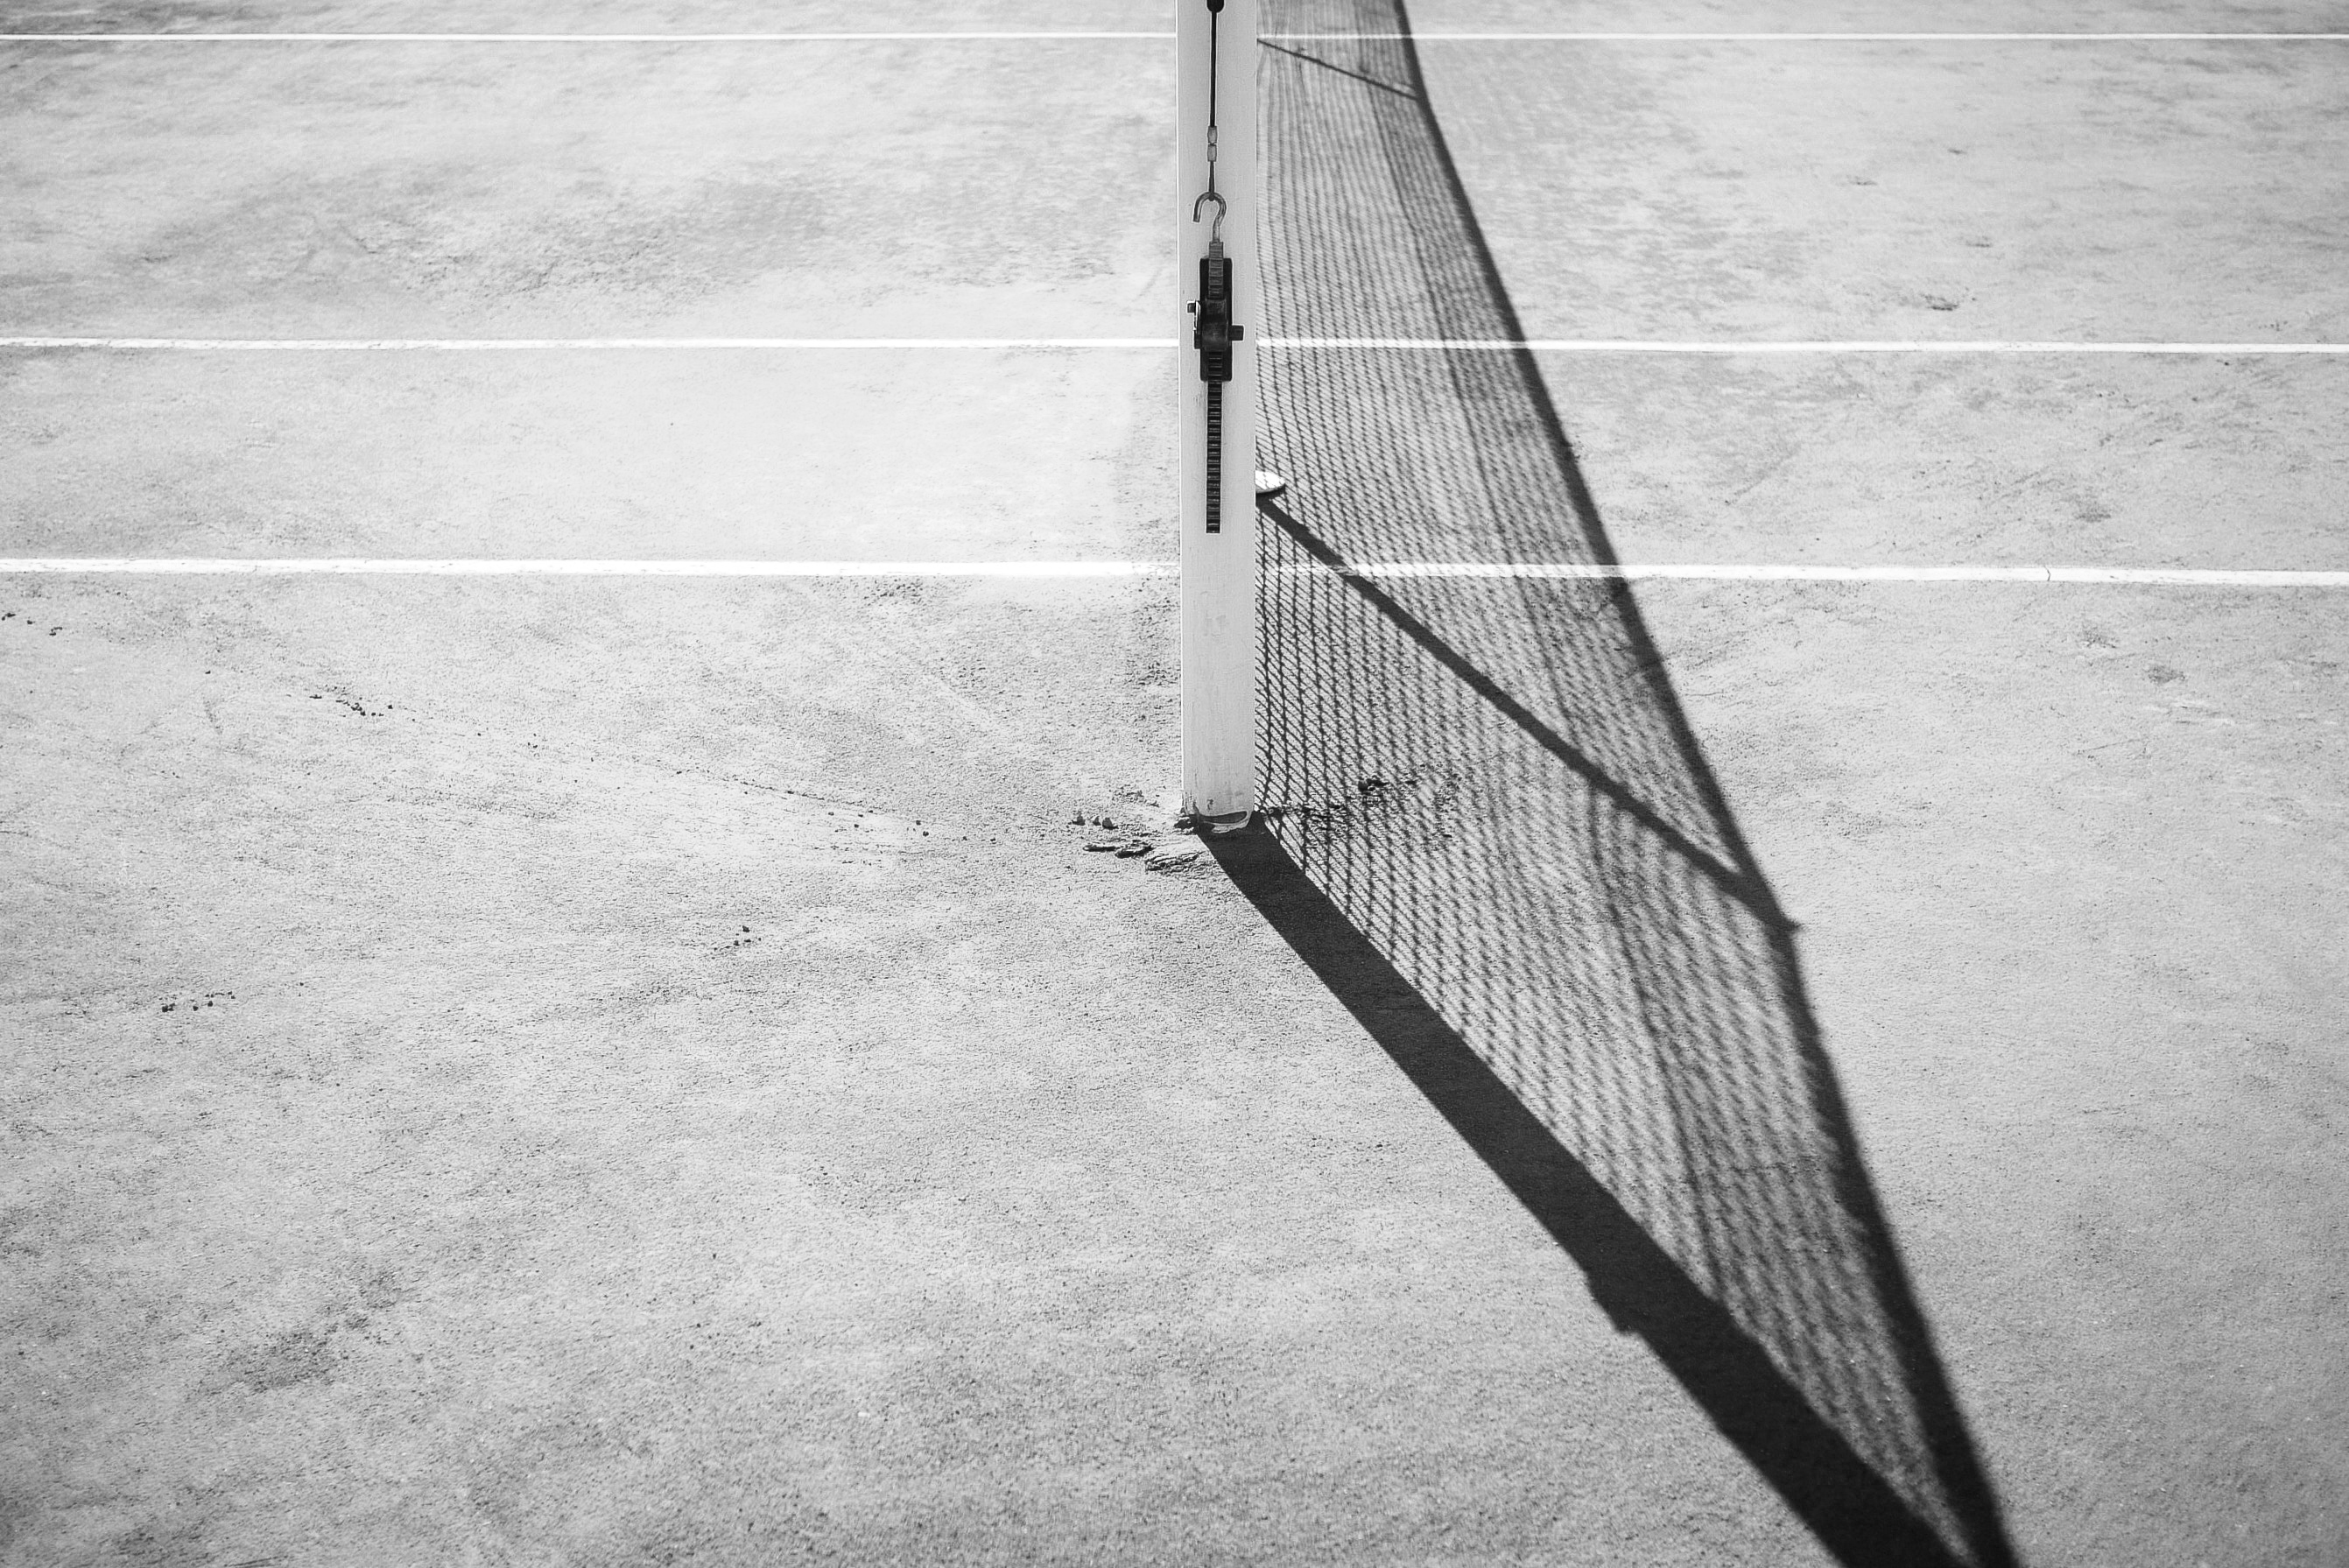 Tennis net shadow